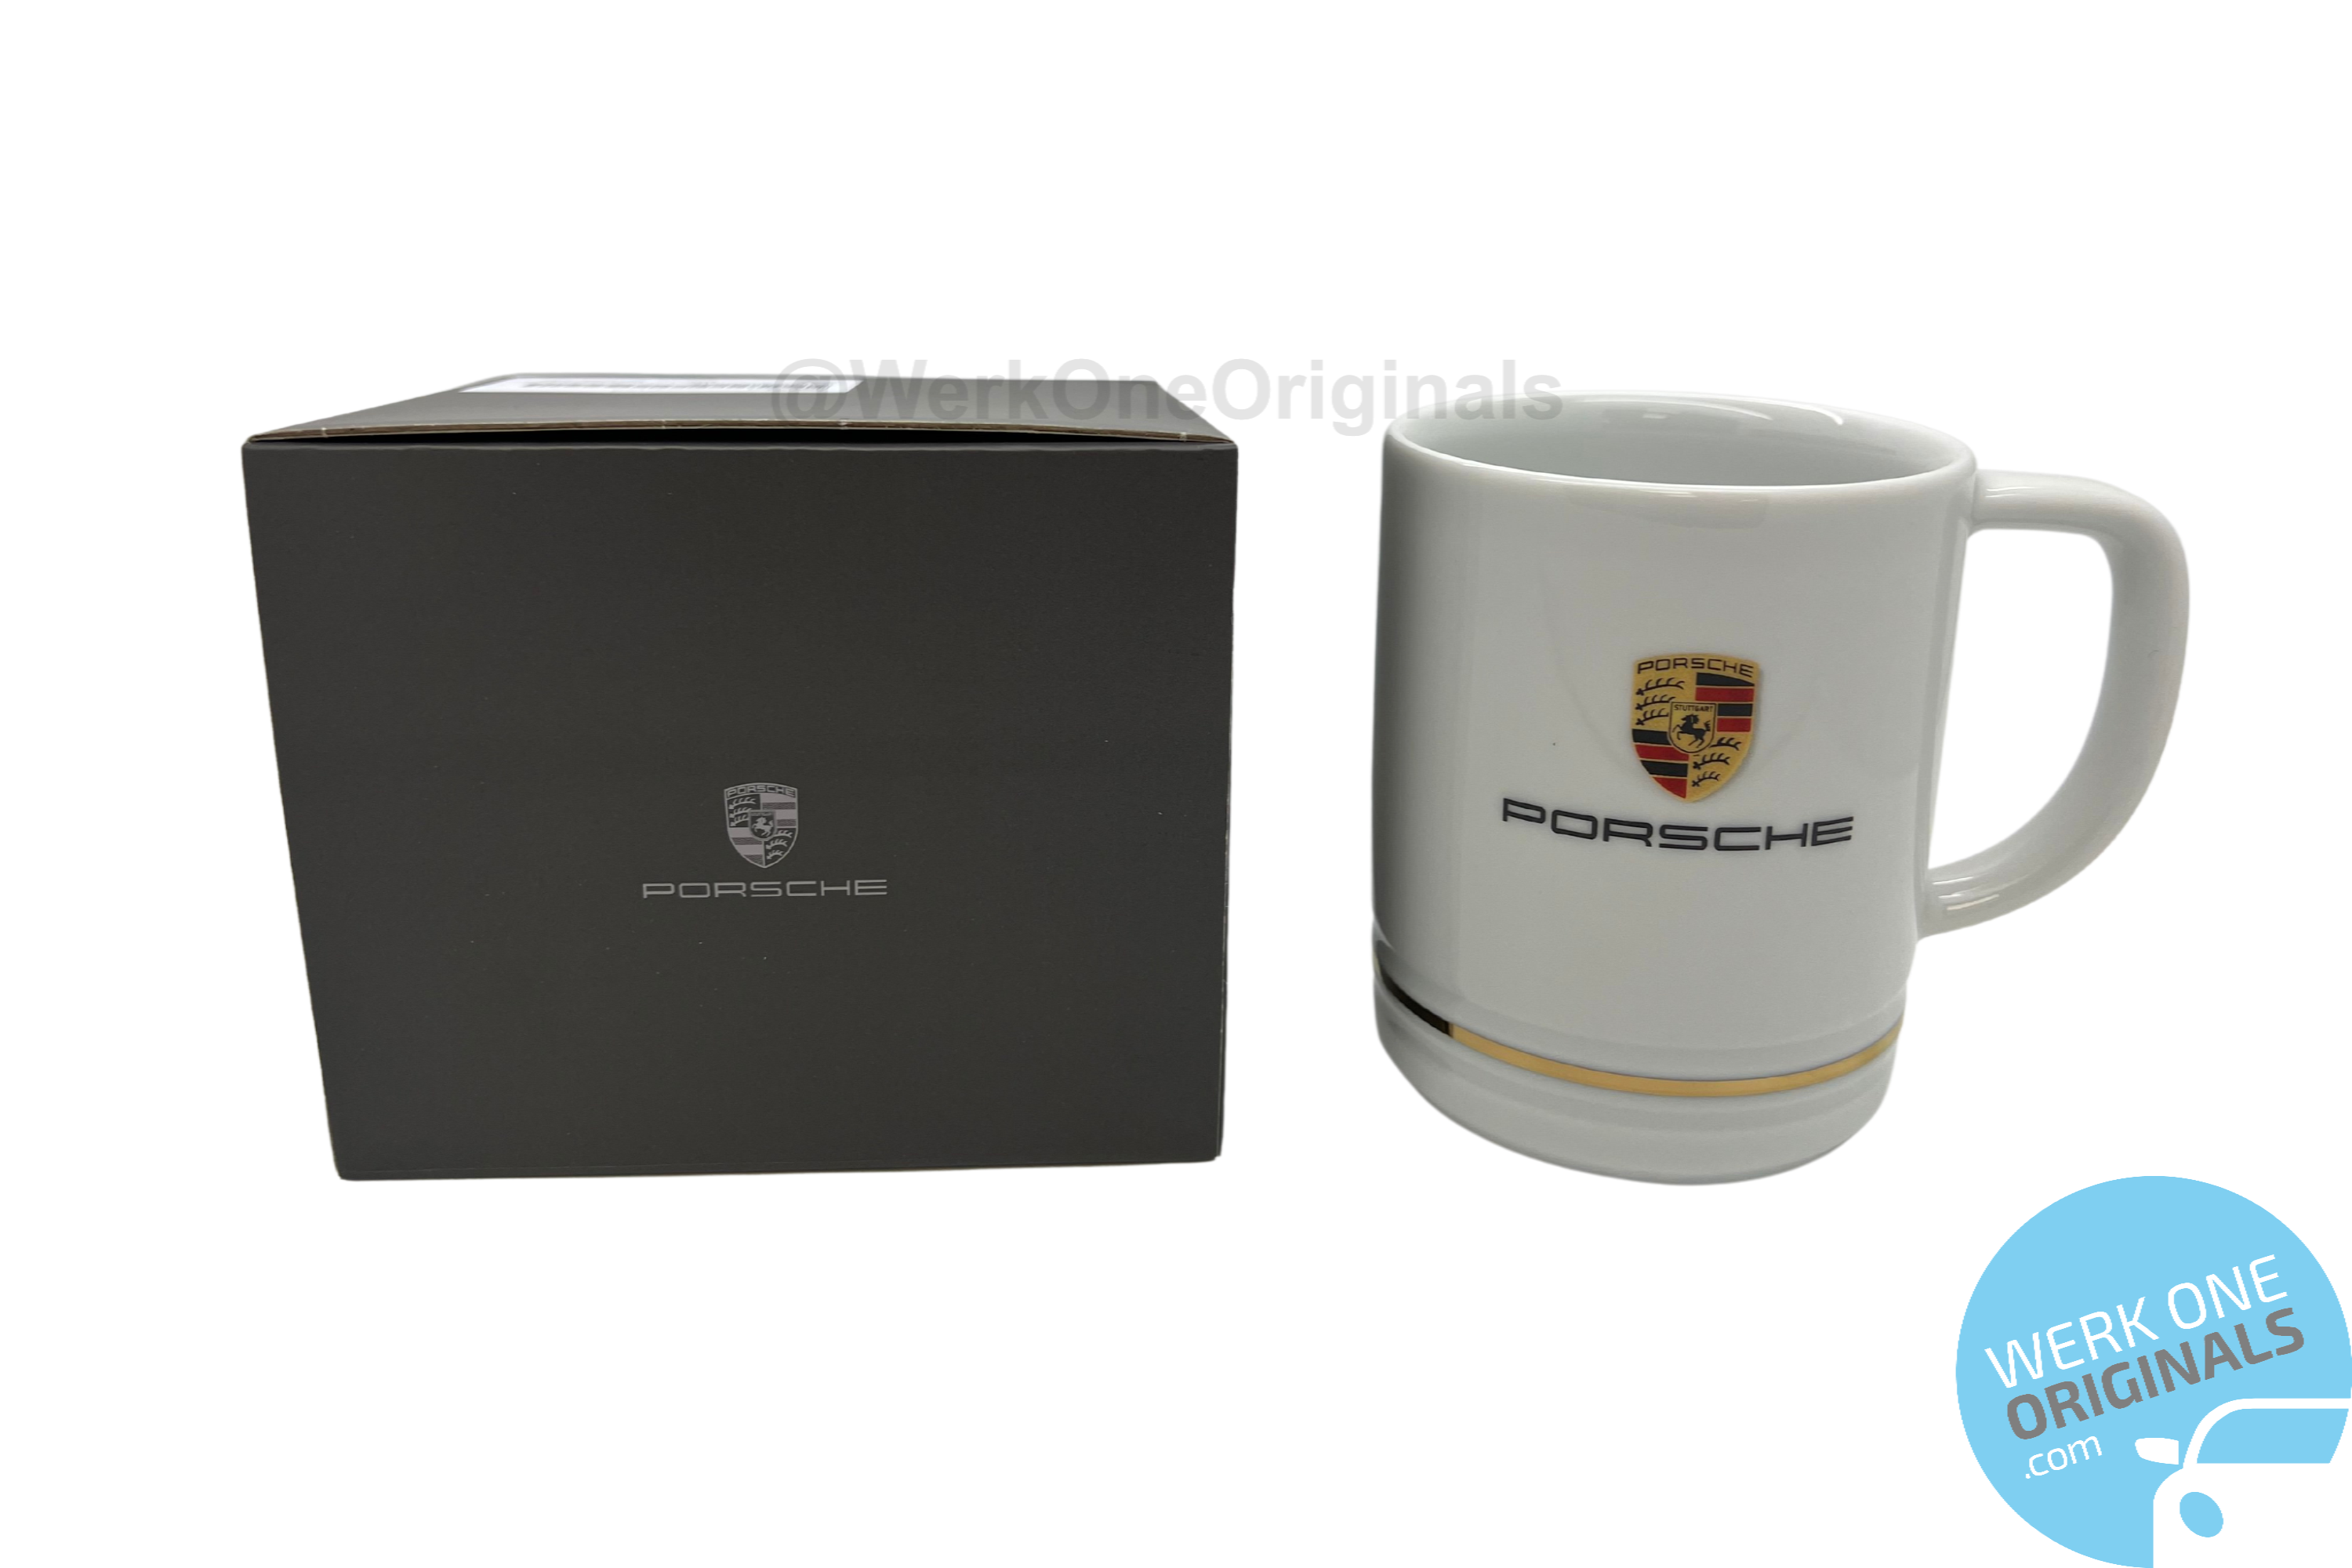 Official Porsche Mug - Classic Style Porsche Crest Cup - White - 420ml